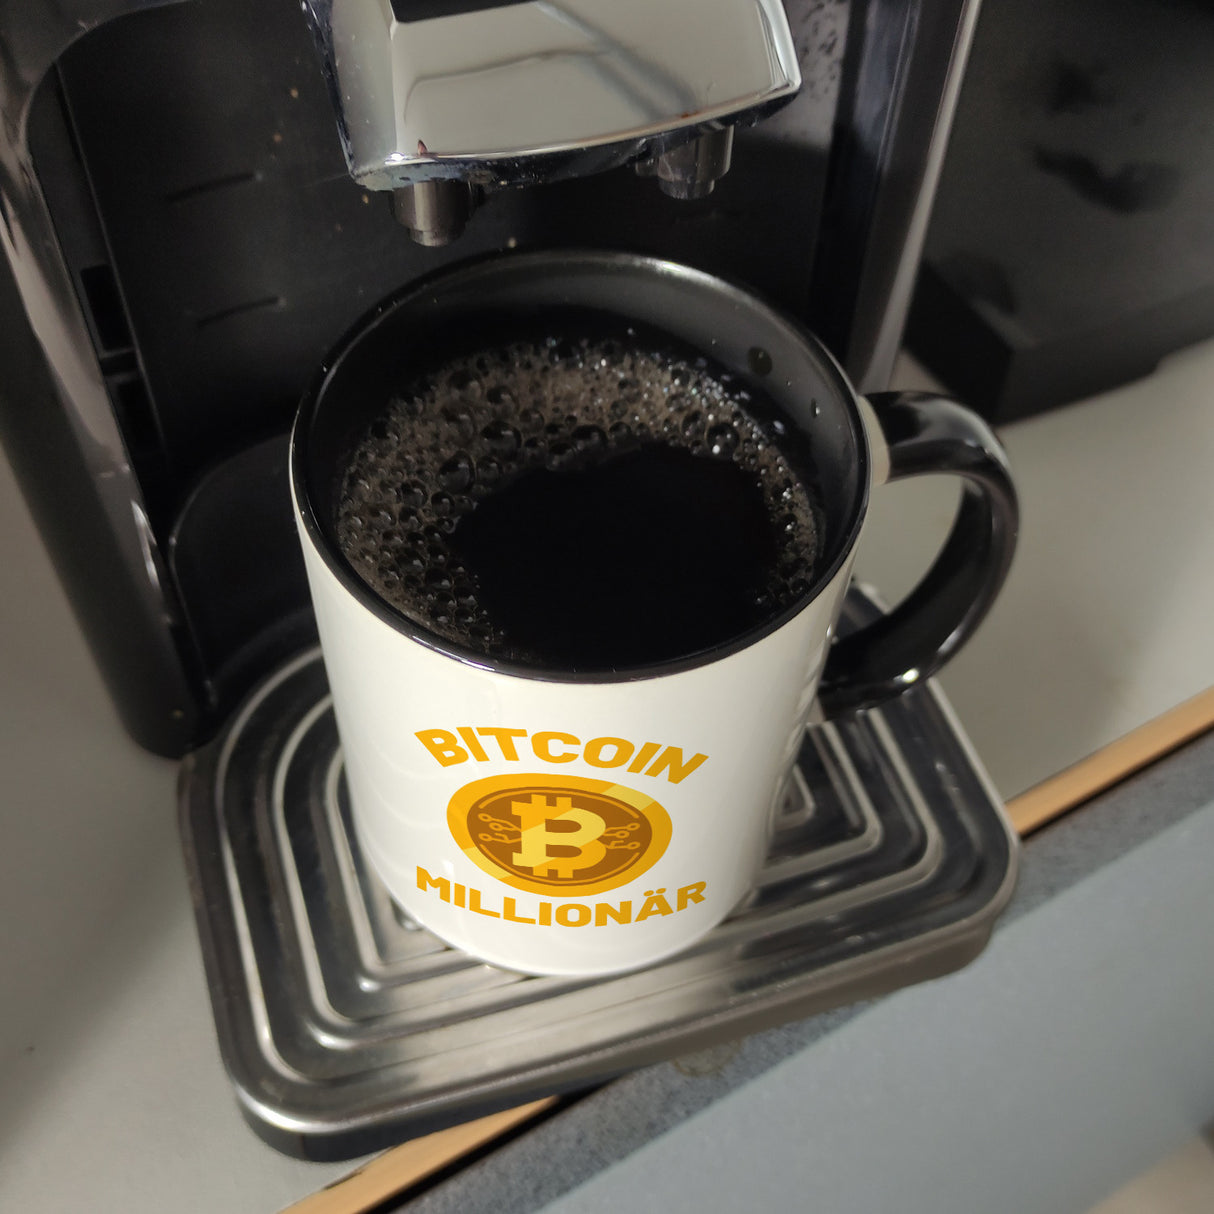 Bitcoin Millionär Kaffeebecher mit Kryptowährung